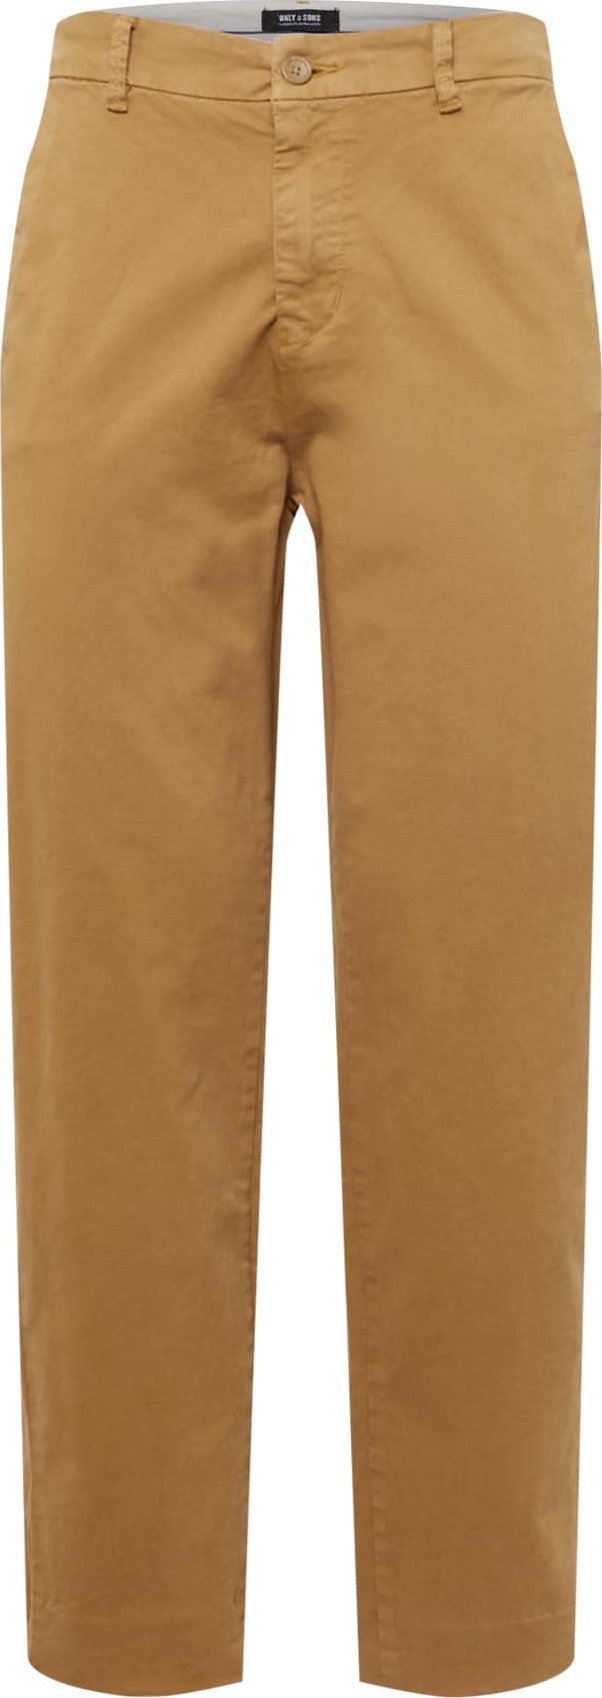 Only & Sons Chino kalhoty 'KENT' velbloudí